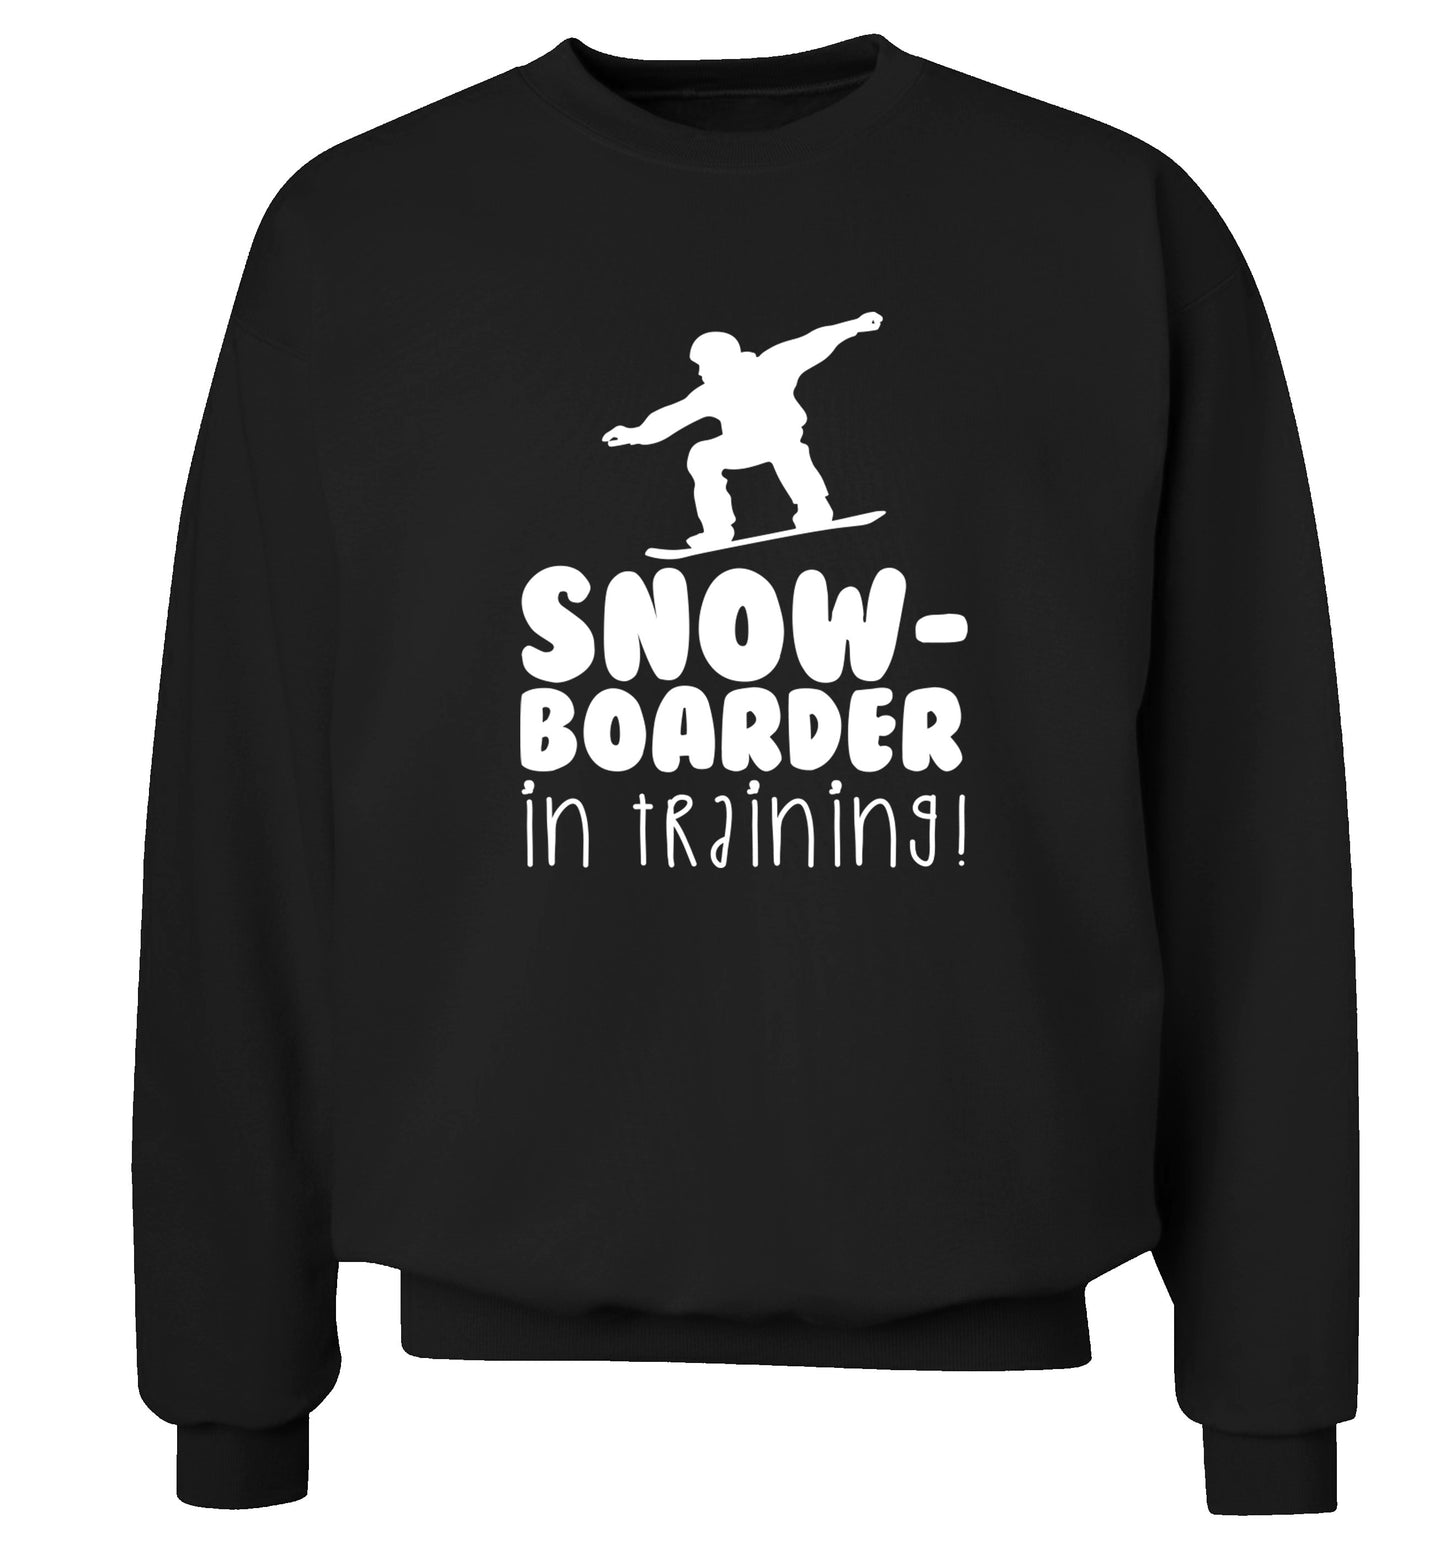 Snowboarder in training Adult's unisex black Sweater 2XL